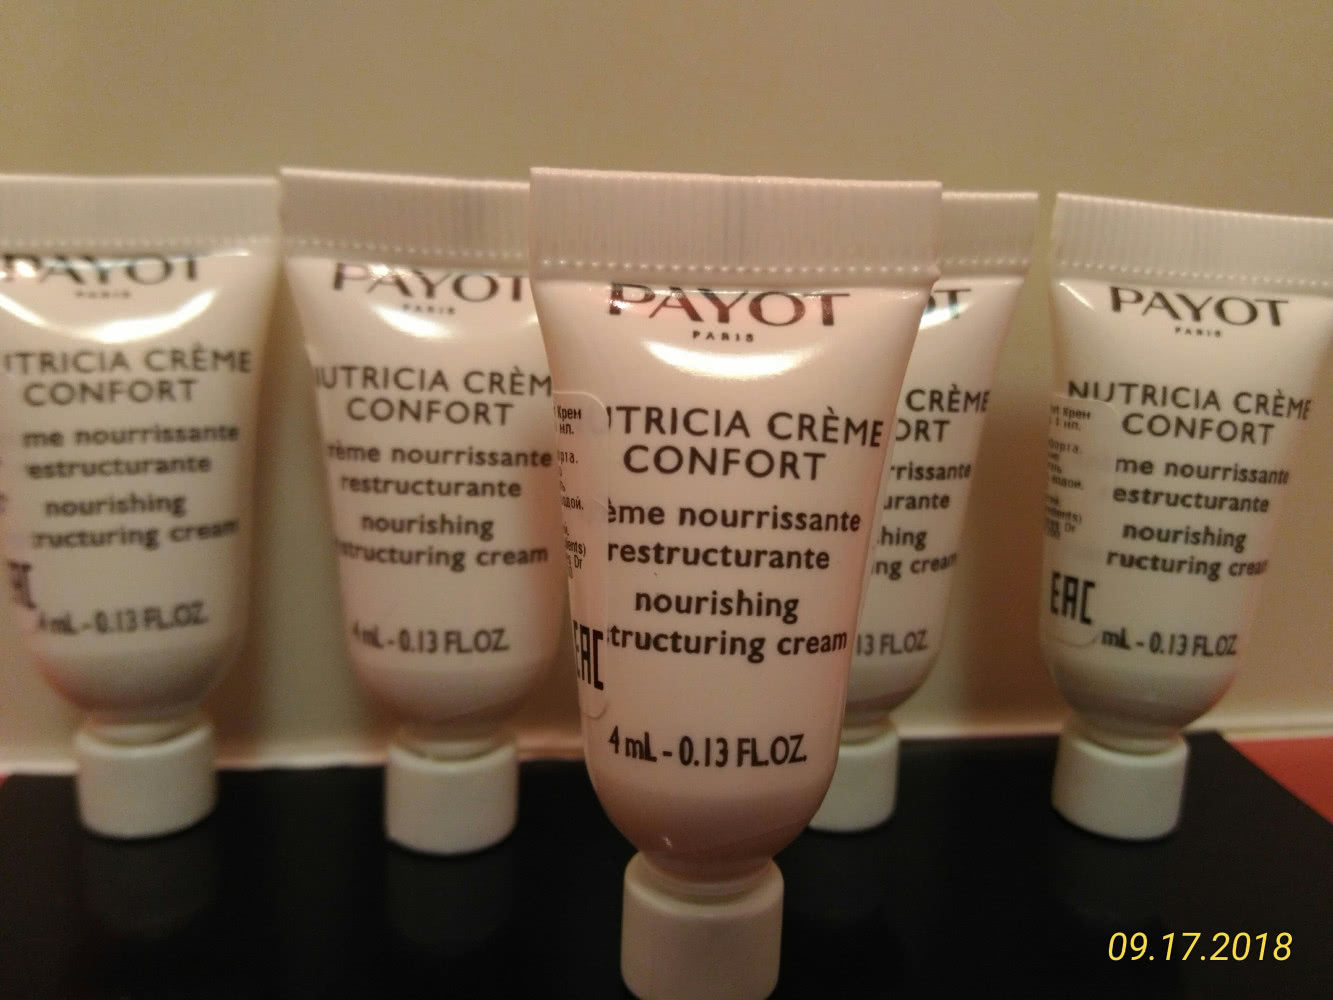 Payot Nutricia Creme Confort 20 ml, доставка в подарок.